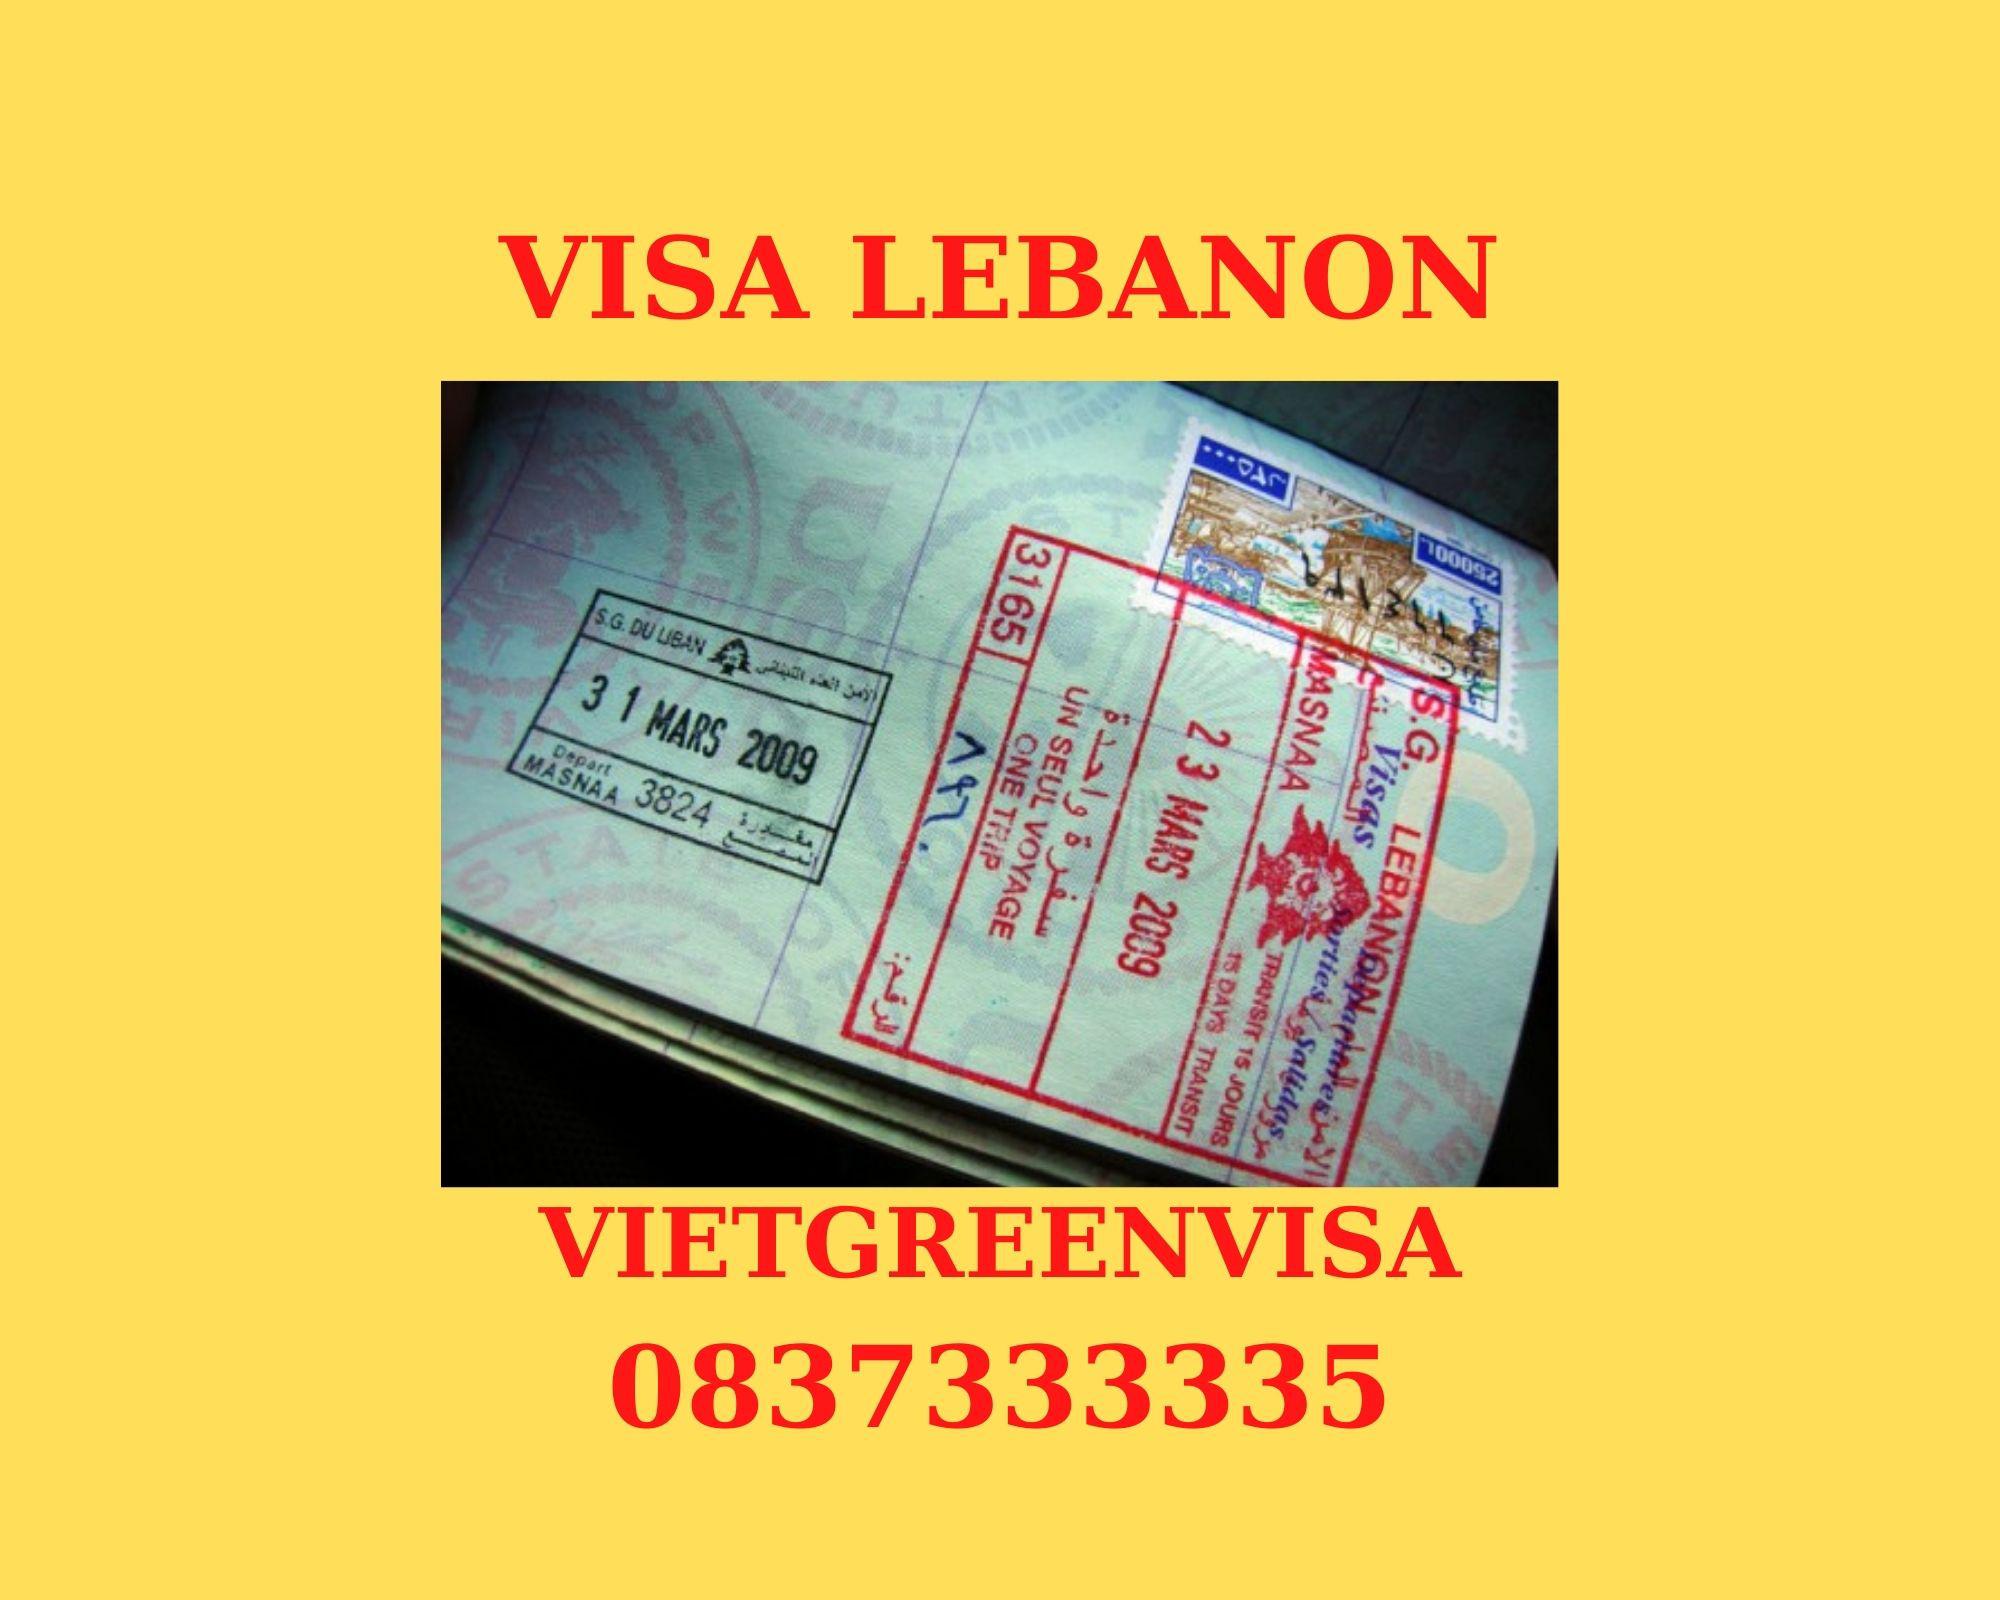 Visa thuyền viên Lebanon, visa Lebanon diện thuyền viên